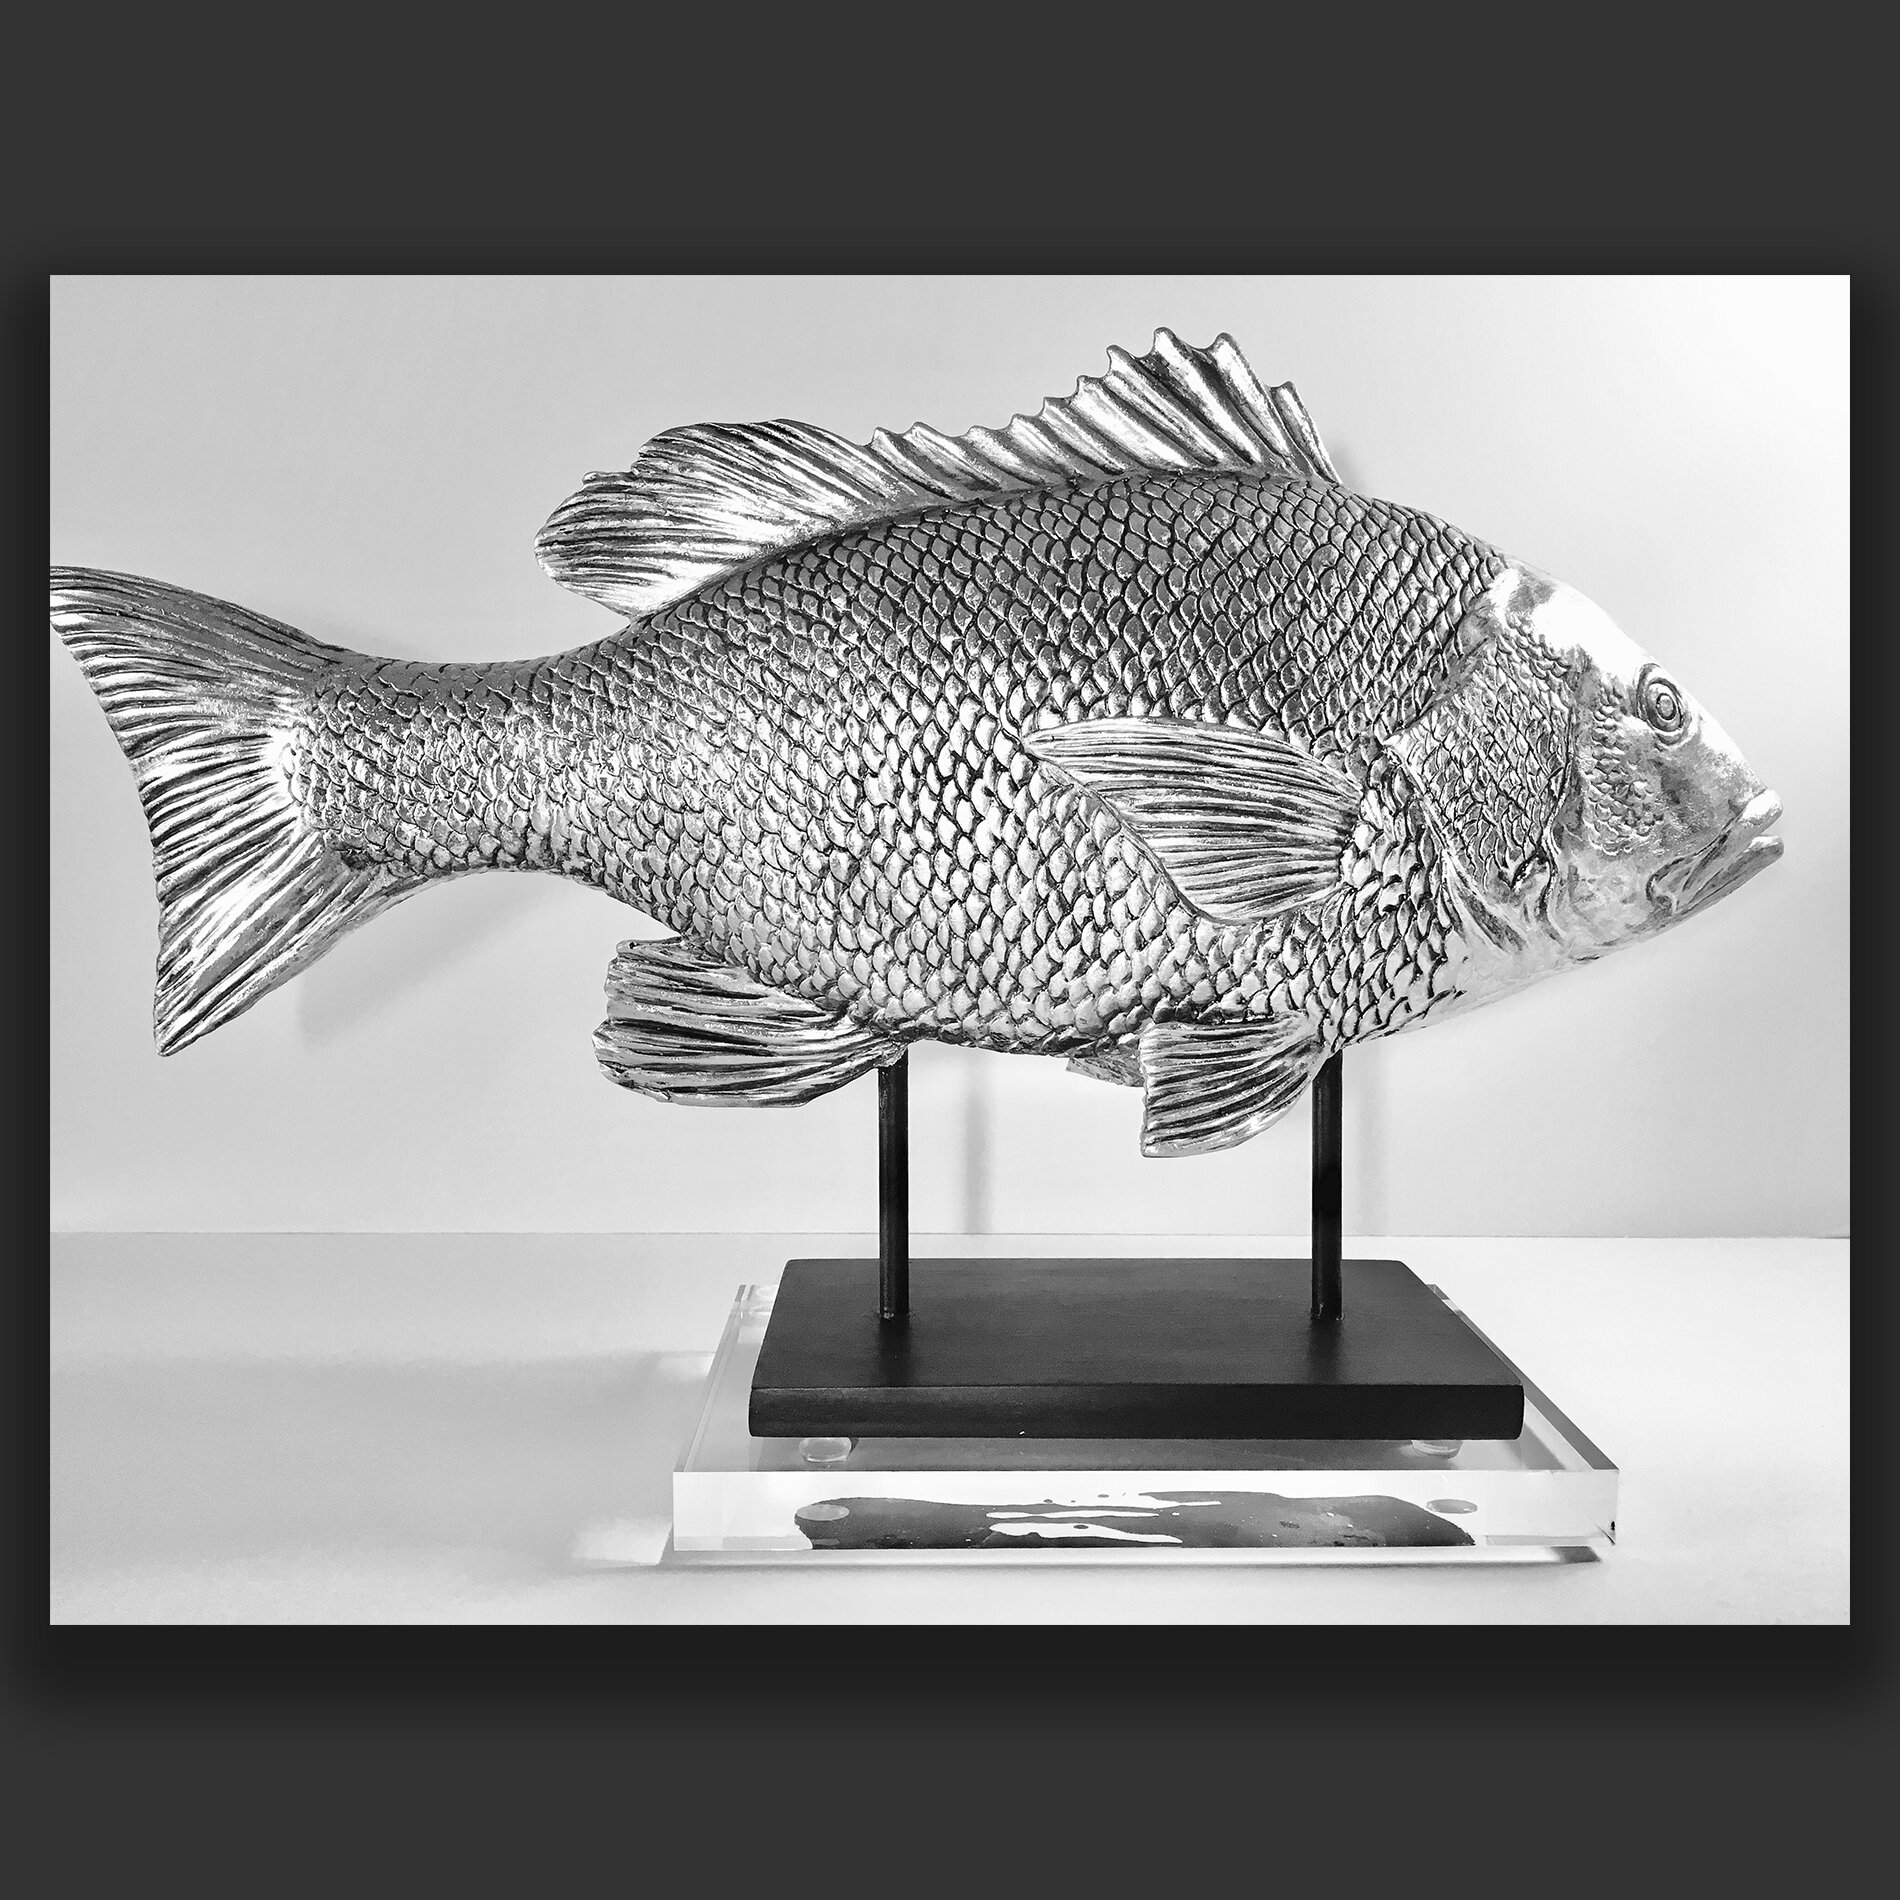 Fish Figurine Tabletop Decor